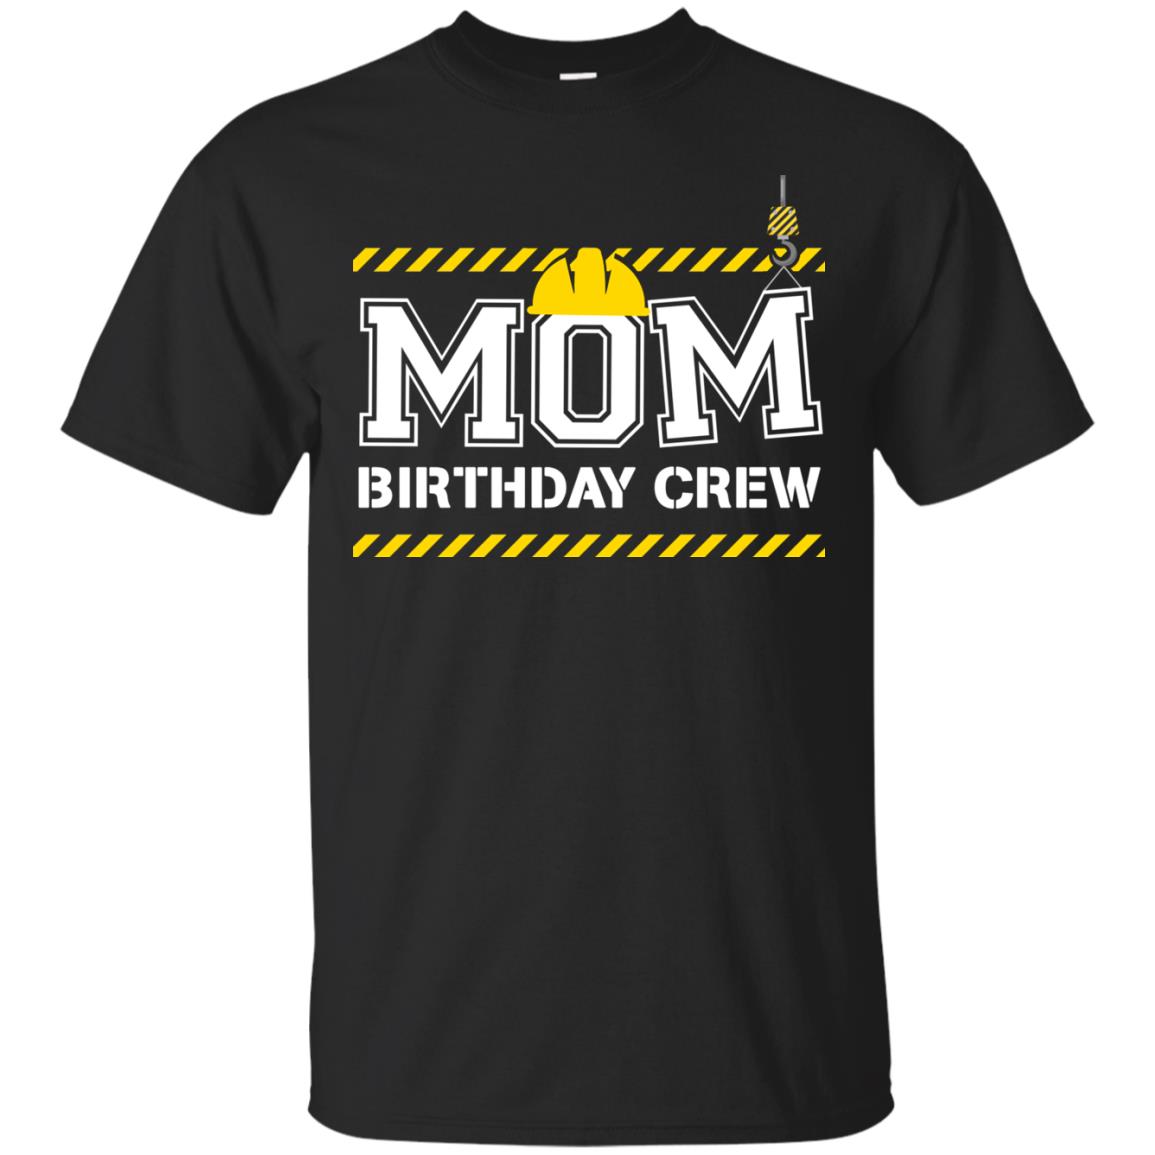 Mom Birthday Crew Construction Worker Shirt For MommyG200 Gildan Ultra Cotton T-Shirt